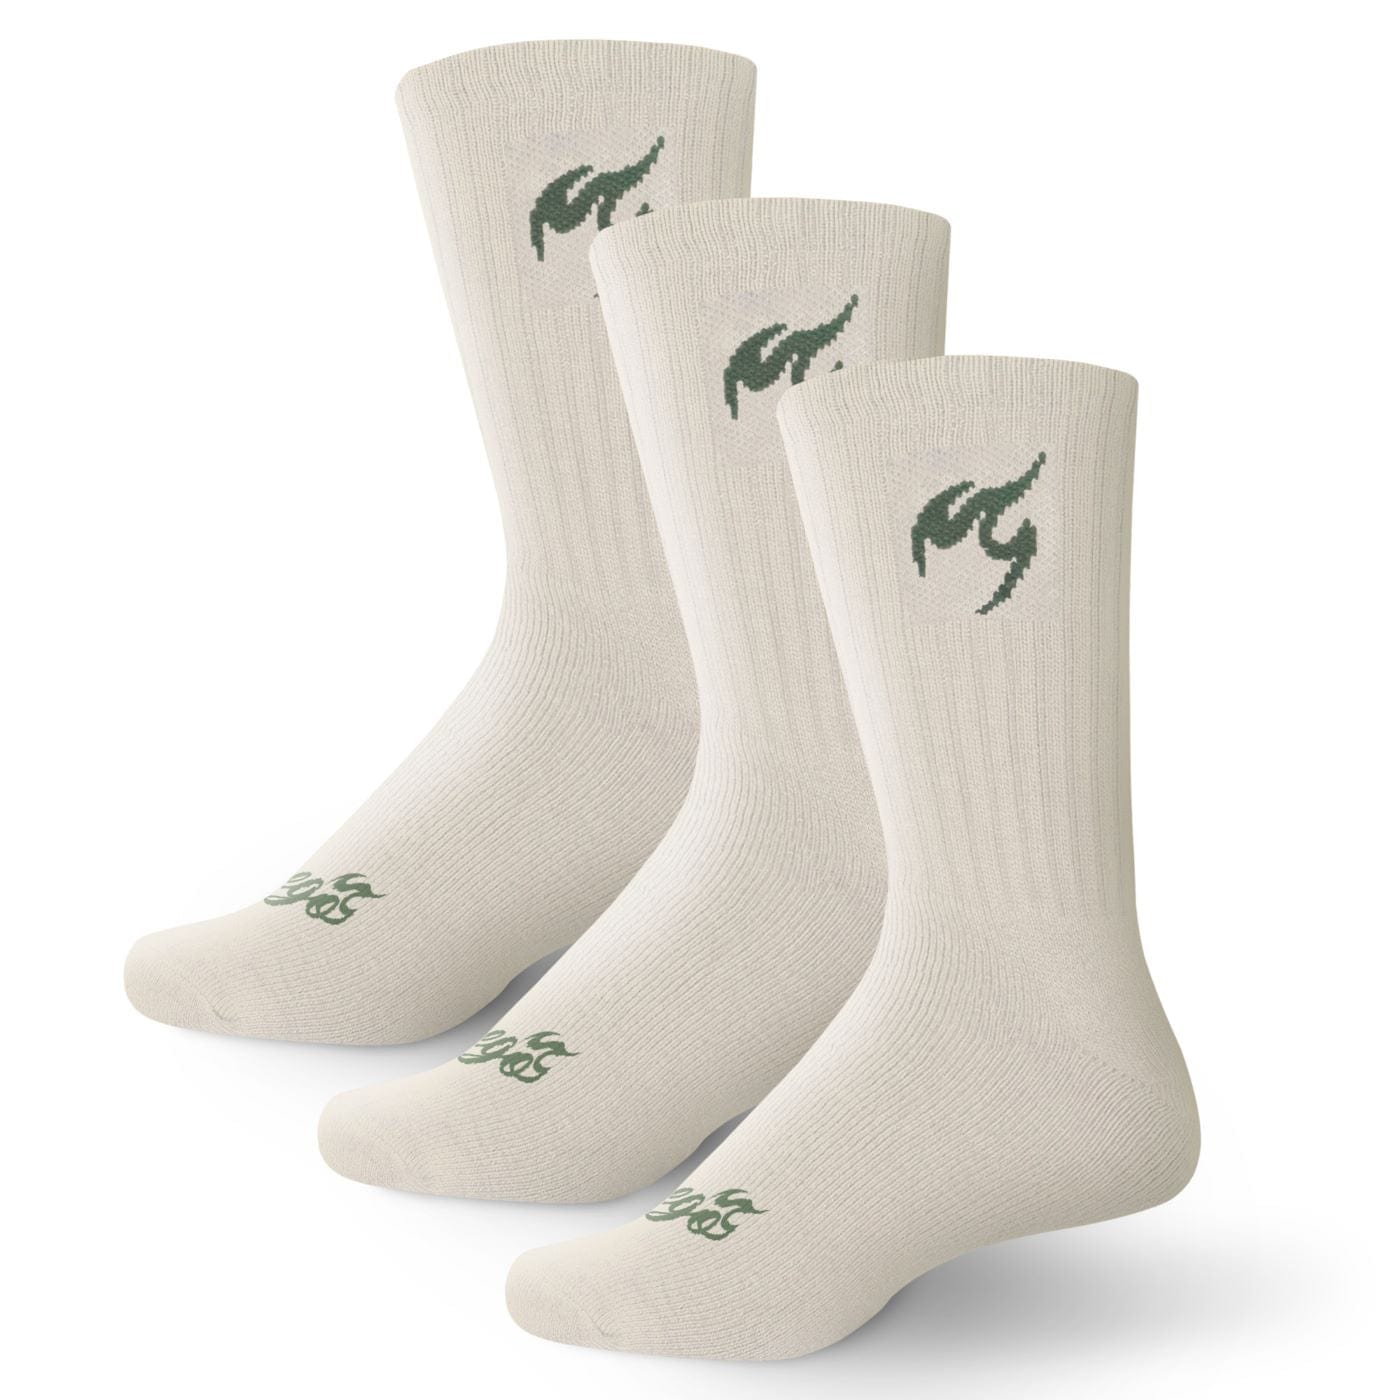 Fuego, Inc. Socks Crew Socks | Beige  (3-pair)